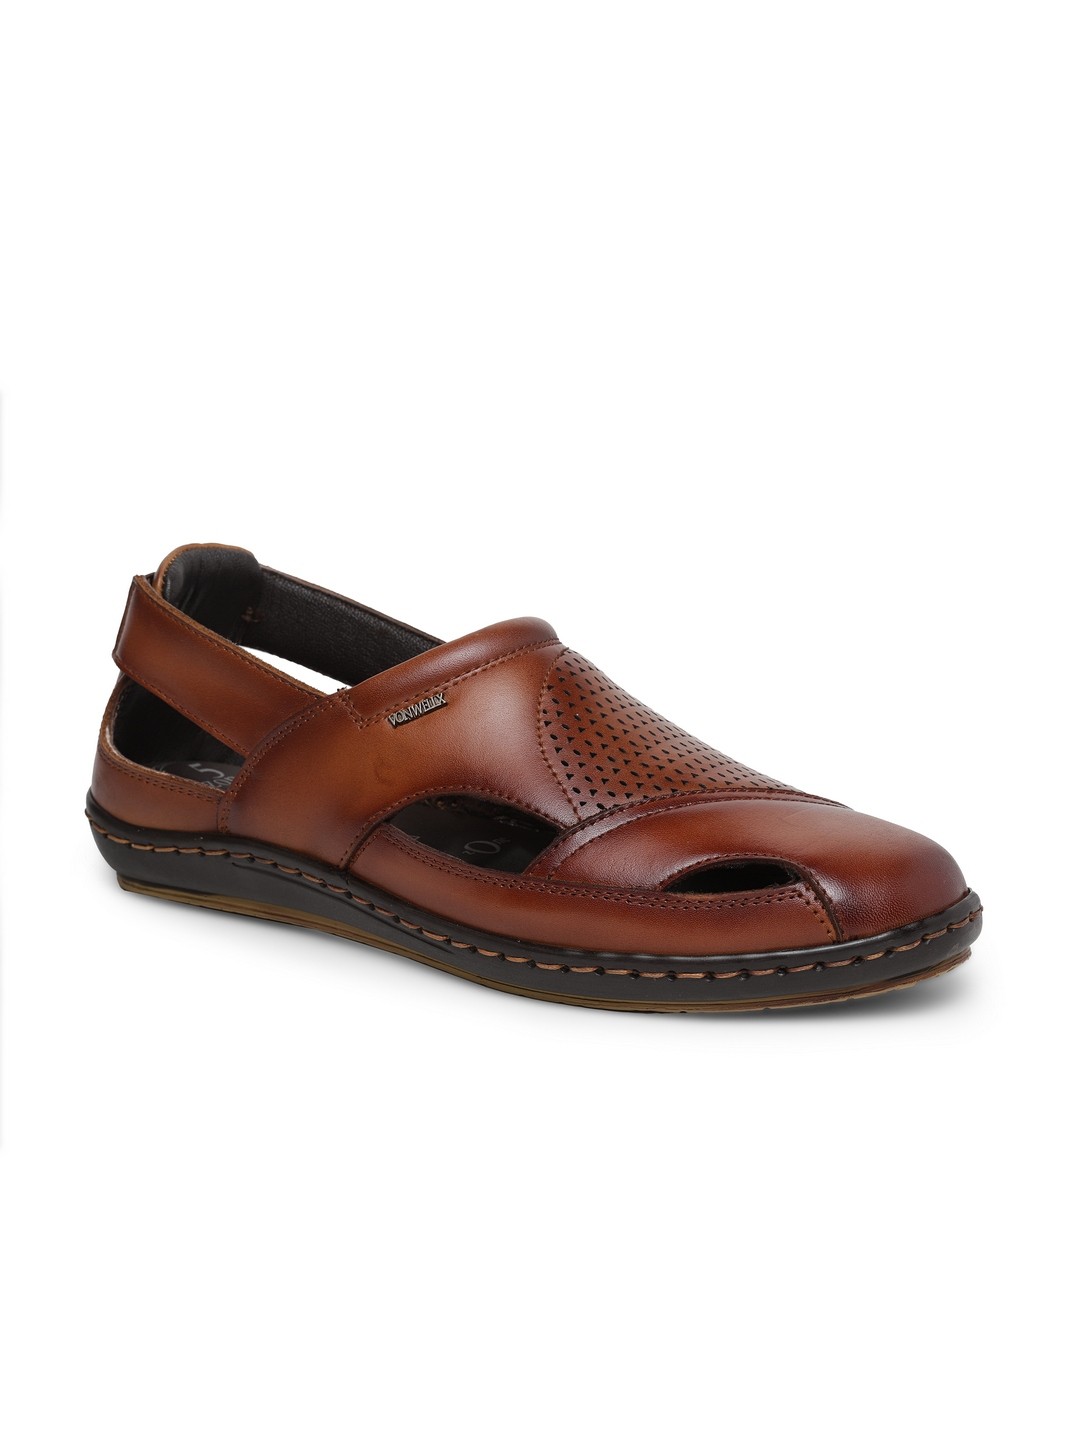 Buy Von Wellx Germany Comfort Men's Tan Sandal Eddie Online in Kolkata